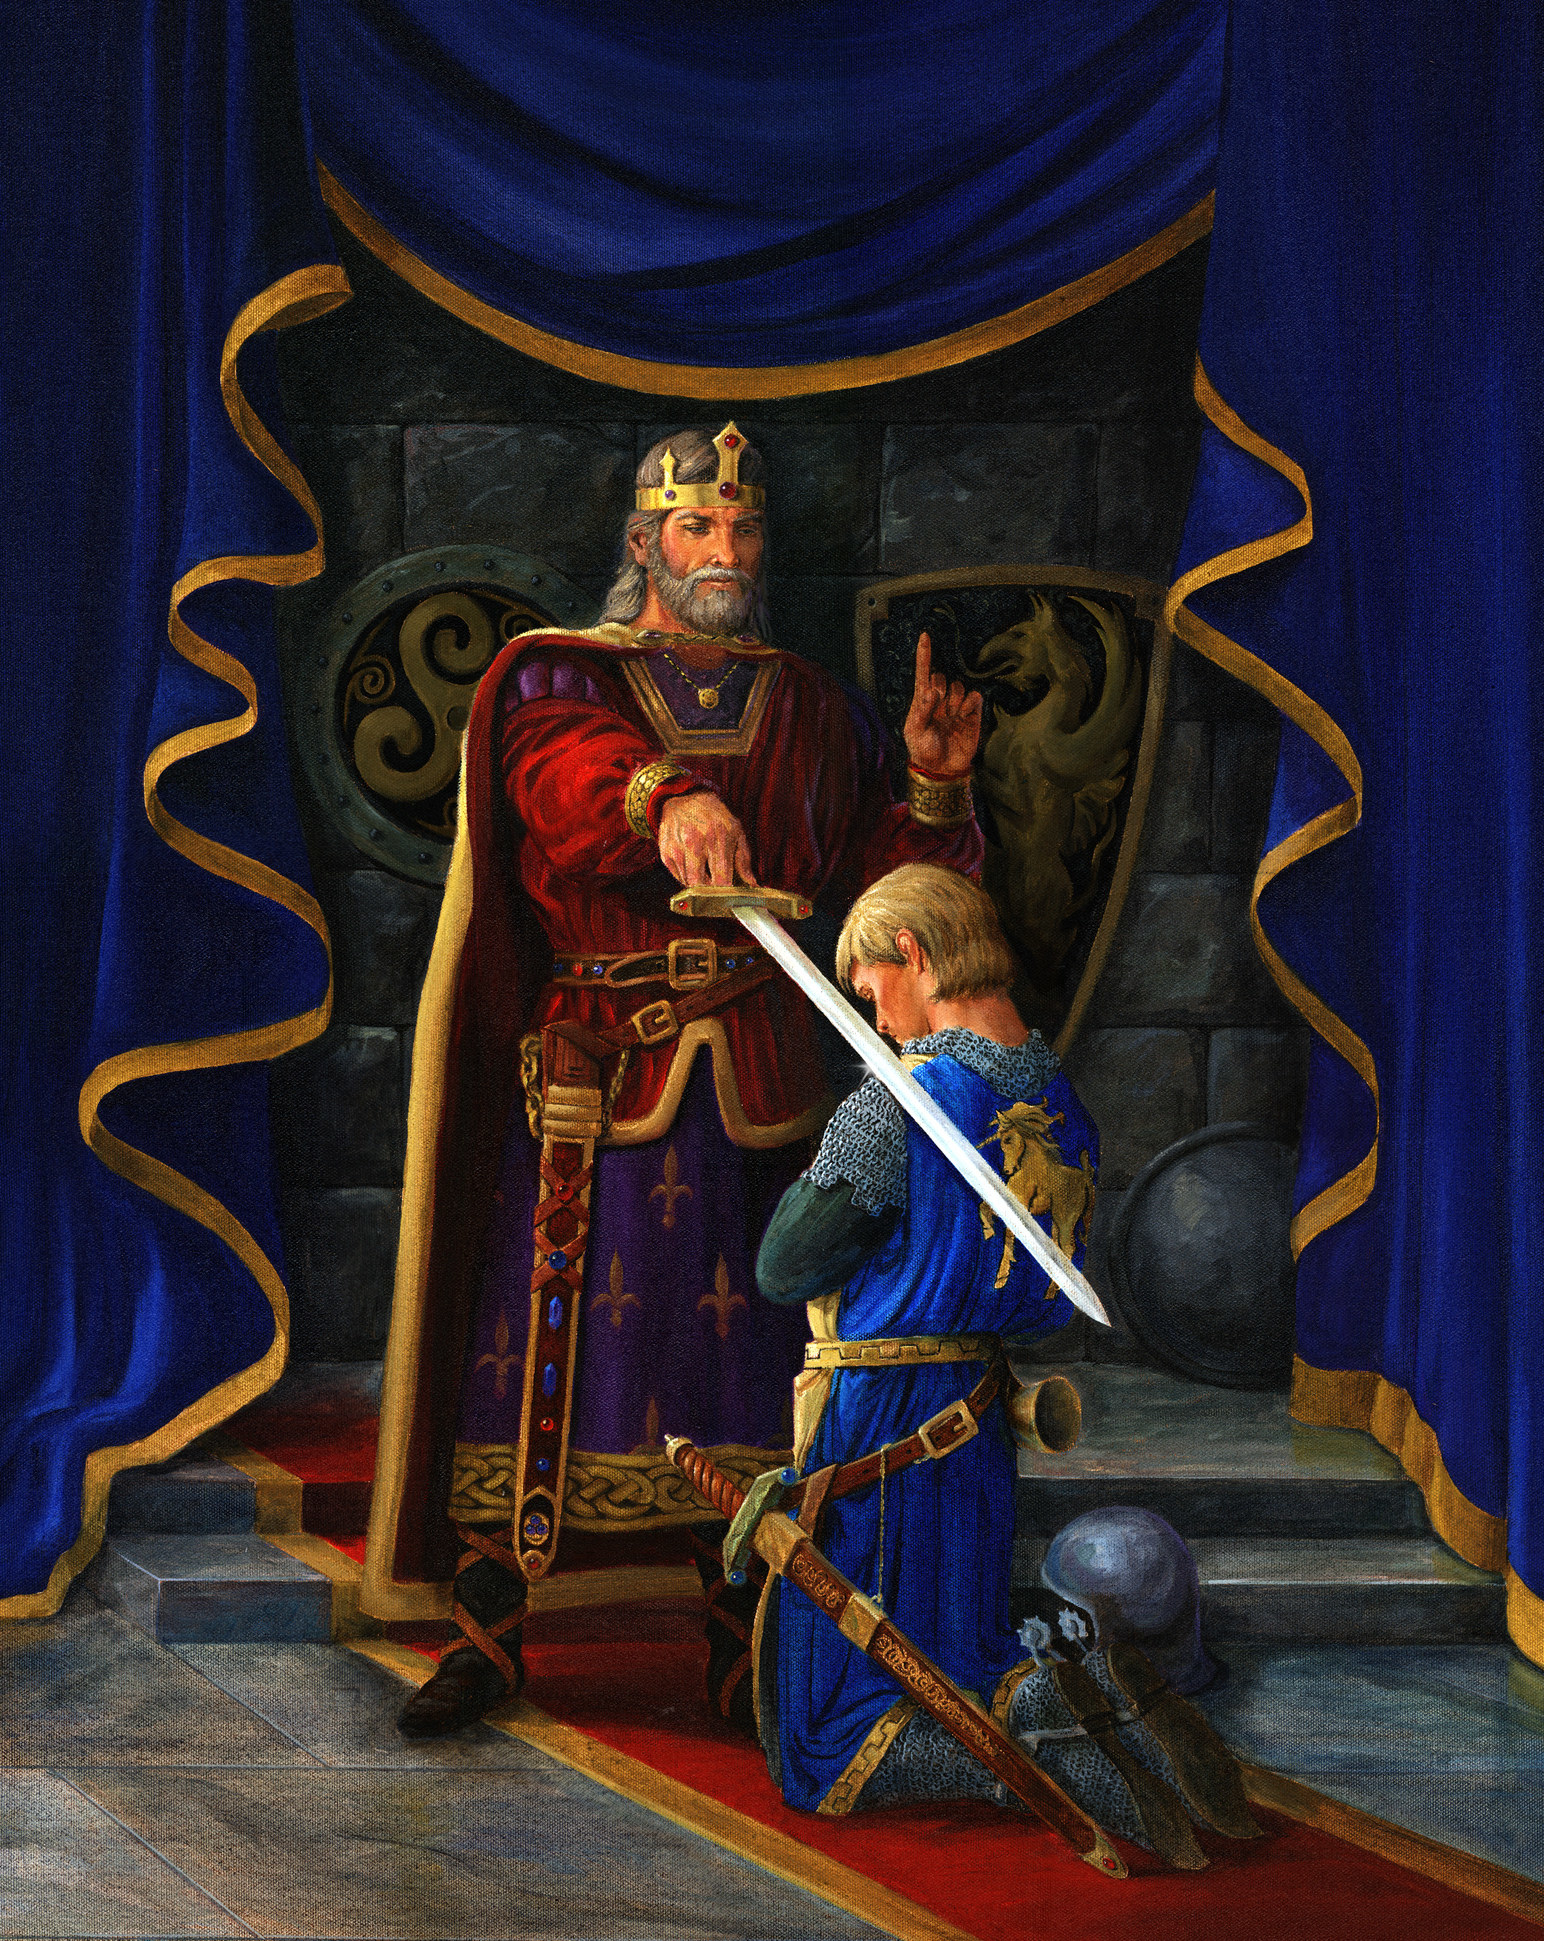 king knighting a man